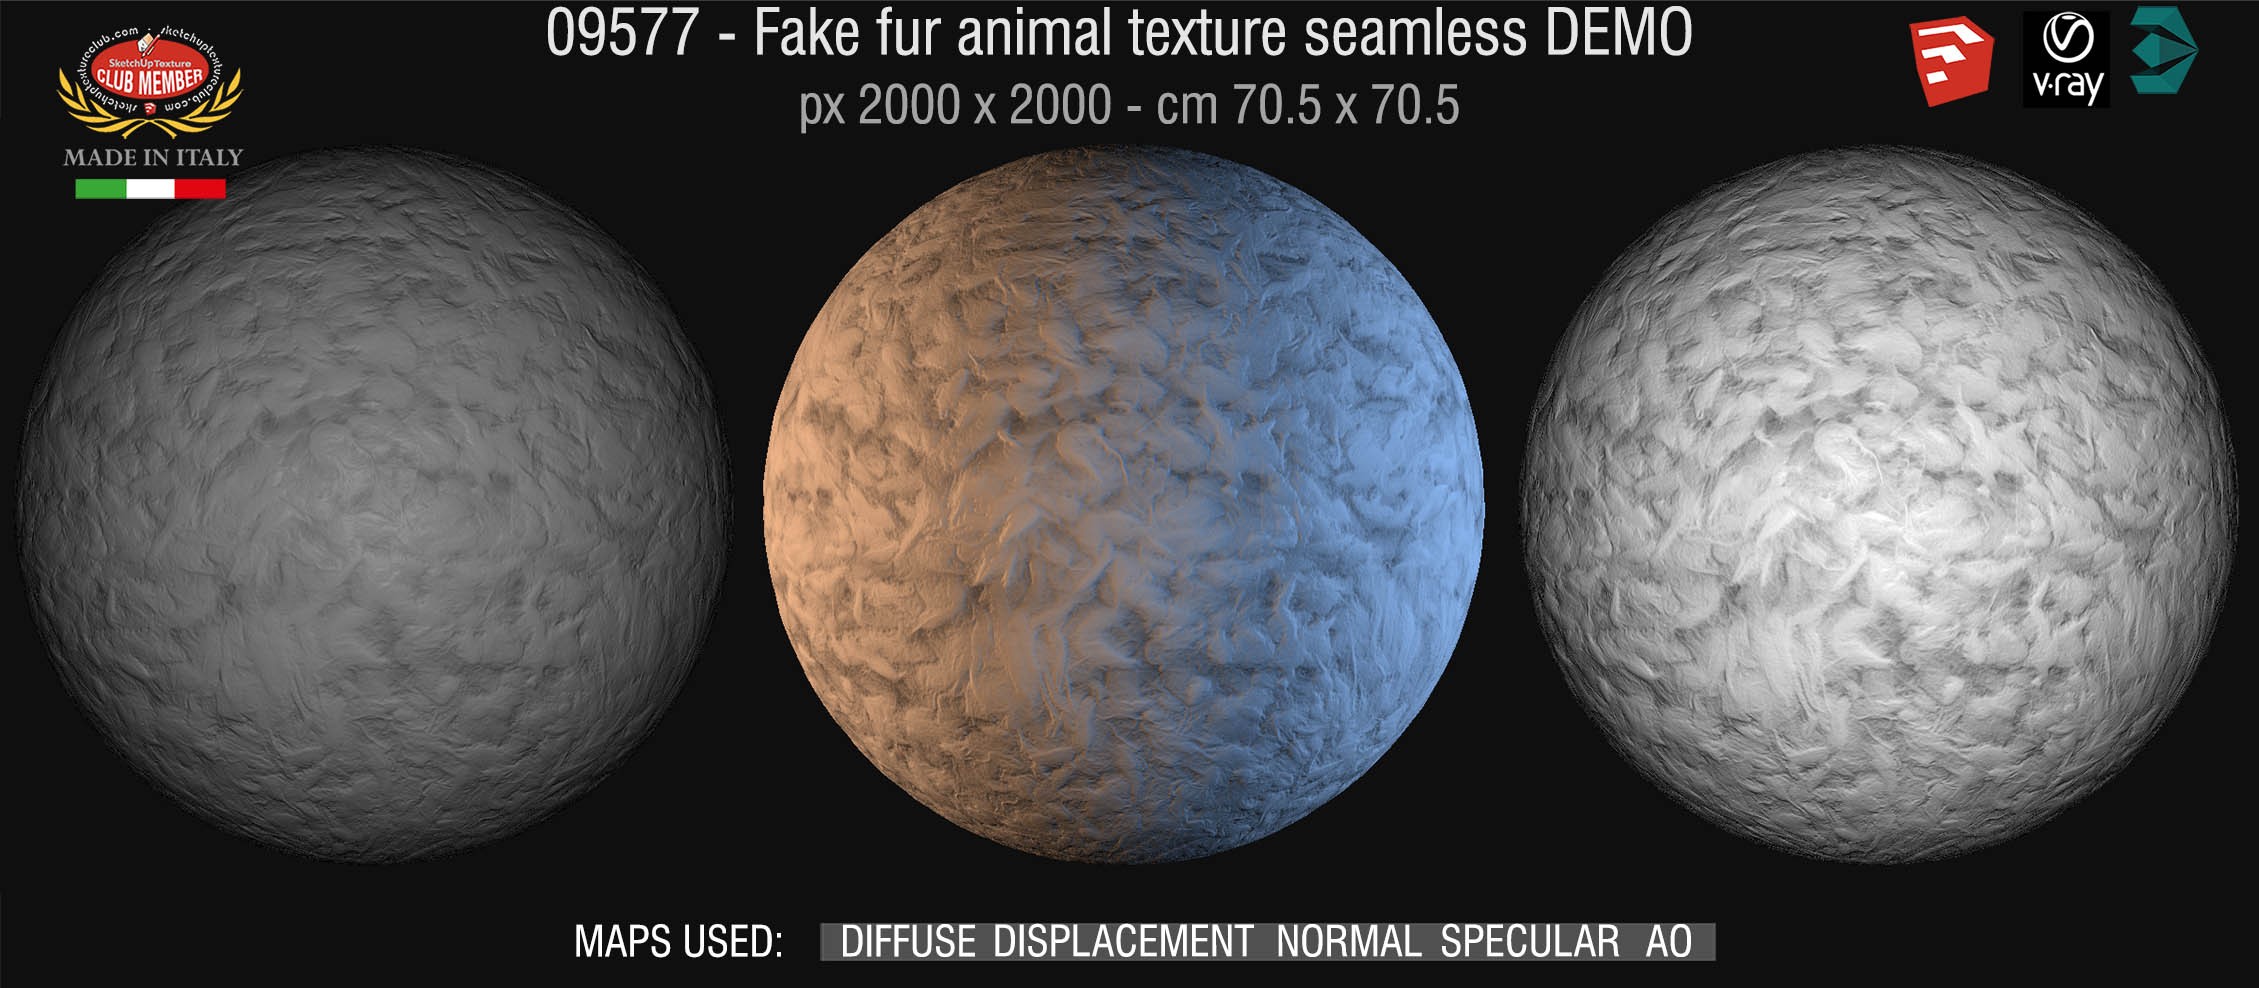 09577 HR fake fur animal texture seamless + maps DEMO